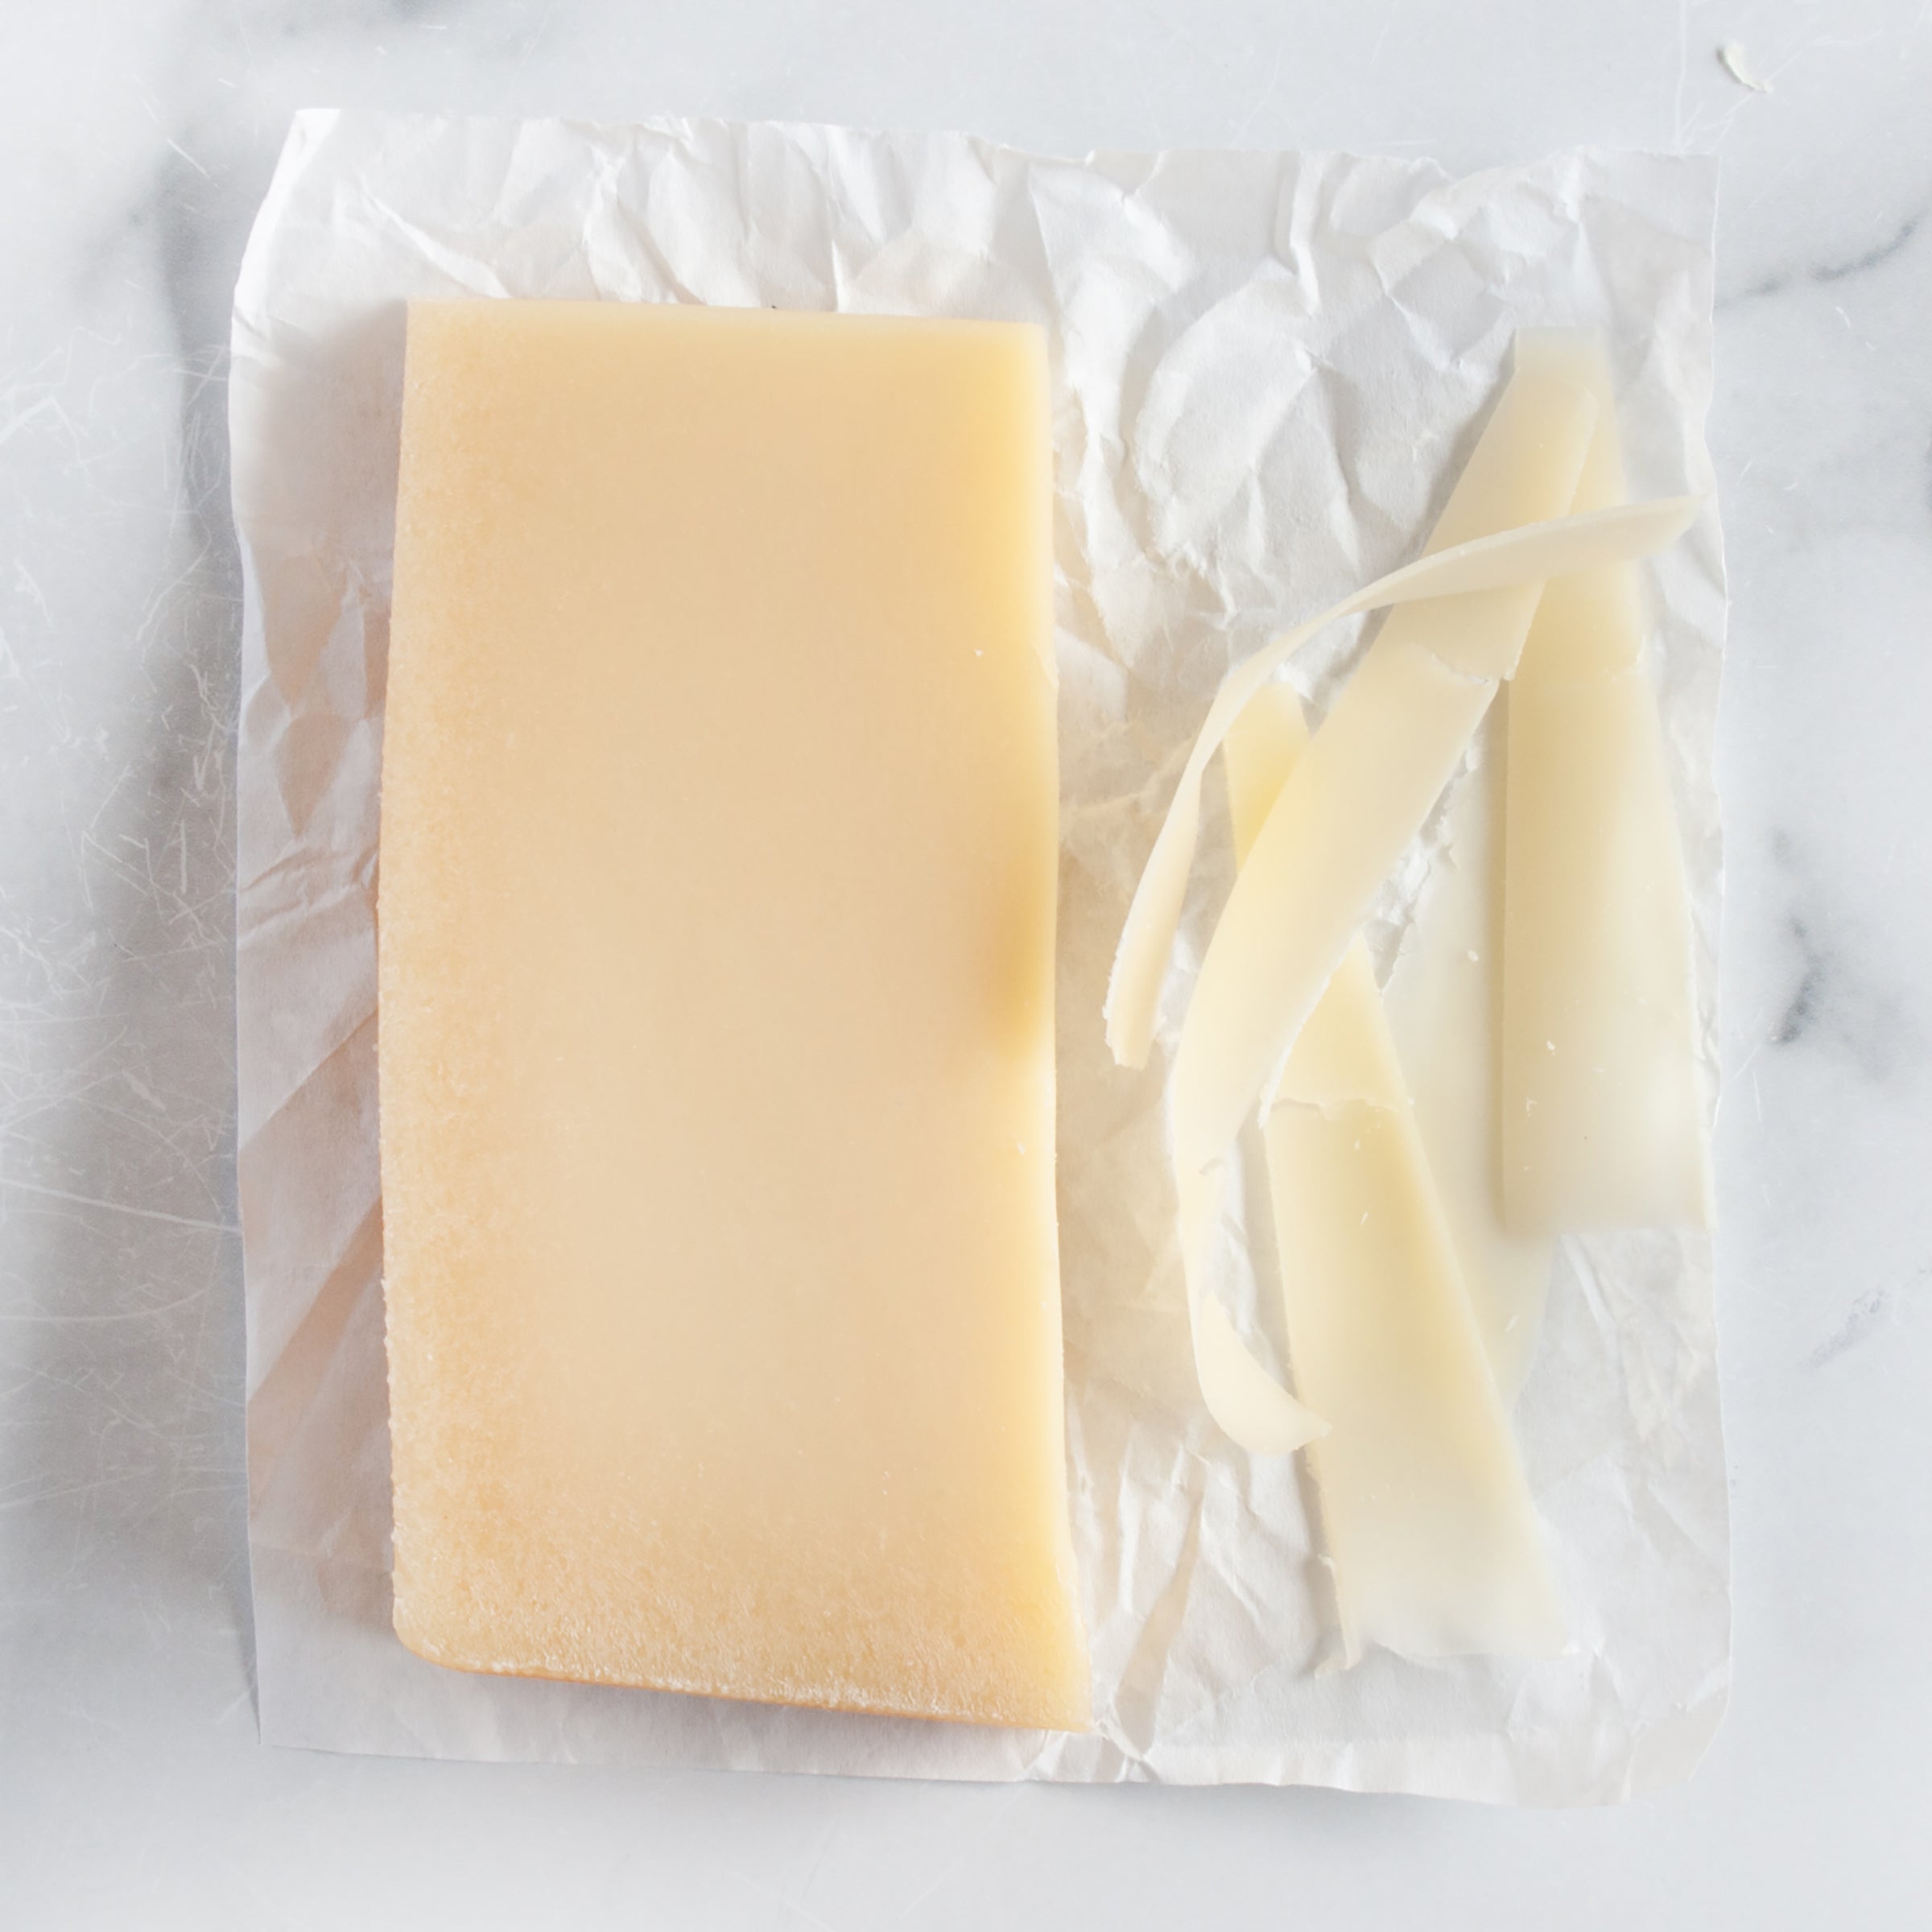 Parmesan 24 Lb - BelGioioso Cheese